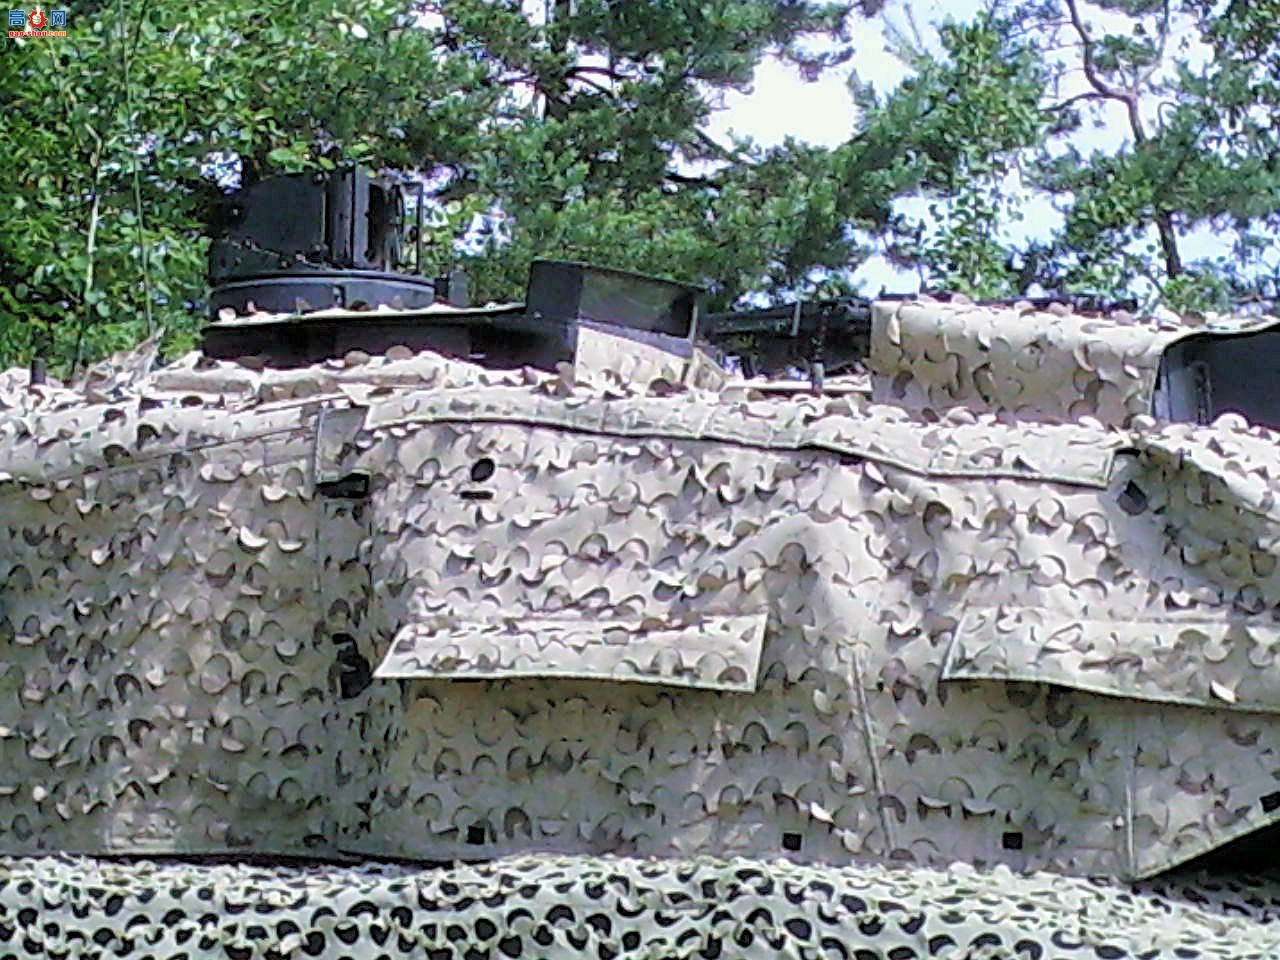  Leopard 2A6(αװ)ս̹